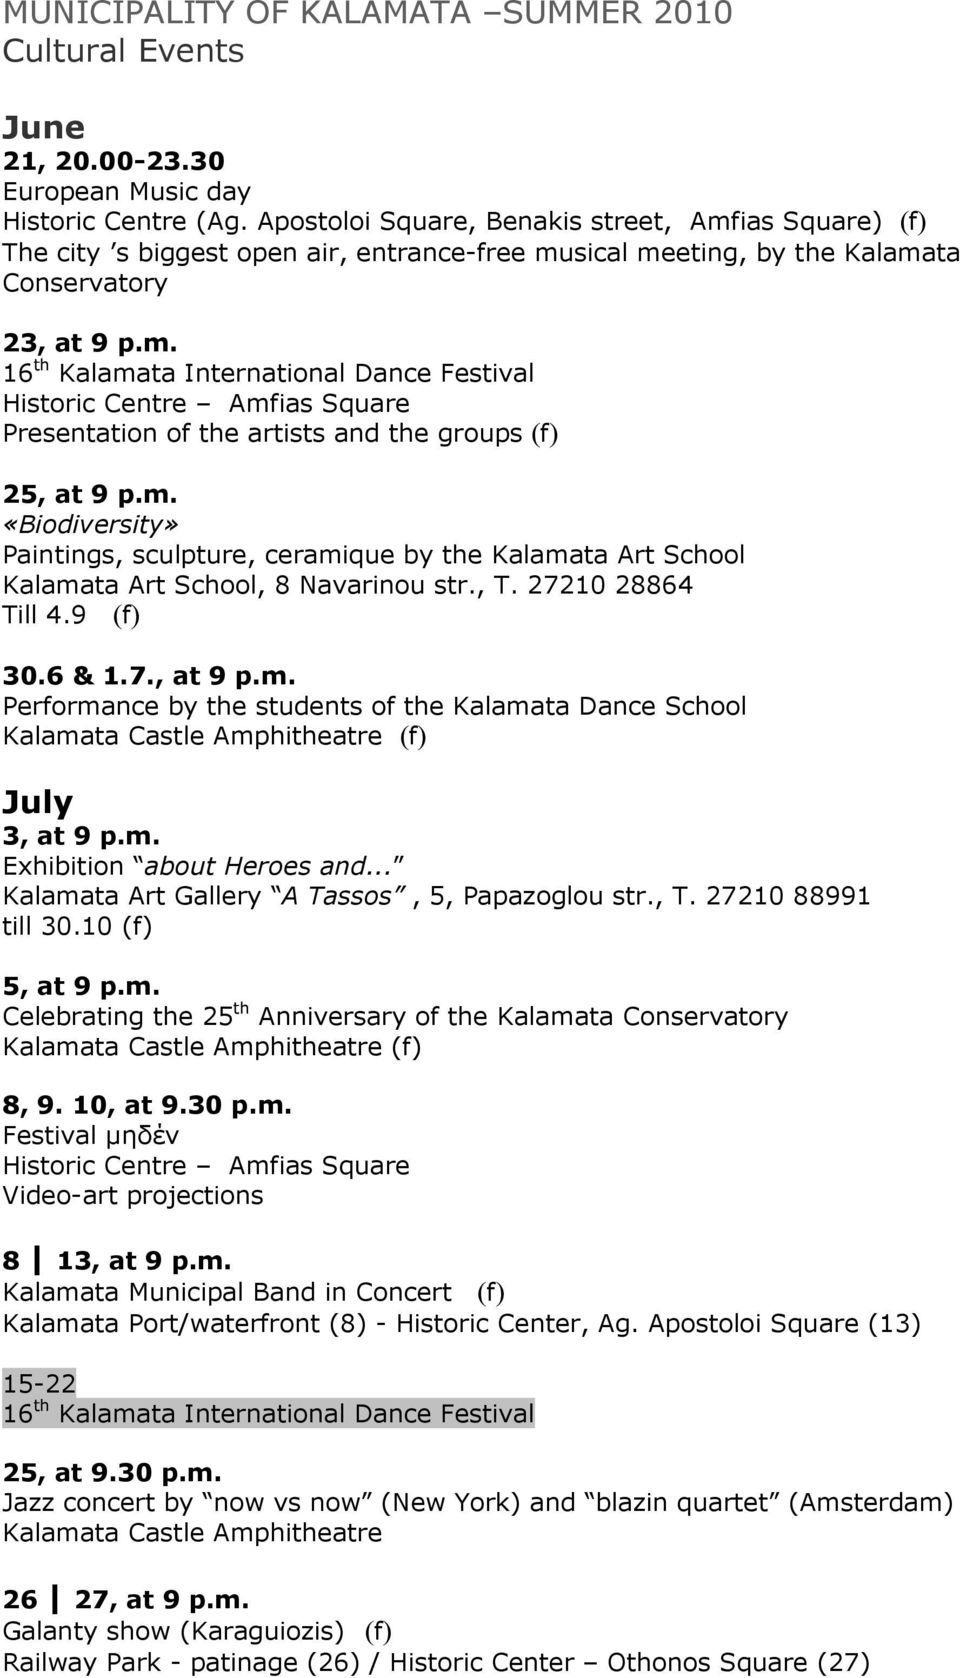 m. «Biodiversity» Paintings, sculpture, ceramique by the Kalamata Art School Kalamata Art School, 8 Navarinou str., T. 27210 28864 Till 4.9 (f) 30.6 & 1.7., at 9 p.m. Performance by the students of the Kalamata Dance School (f) July 3, at 9 p.